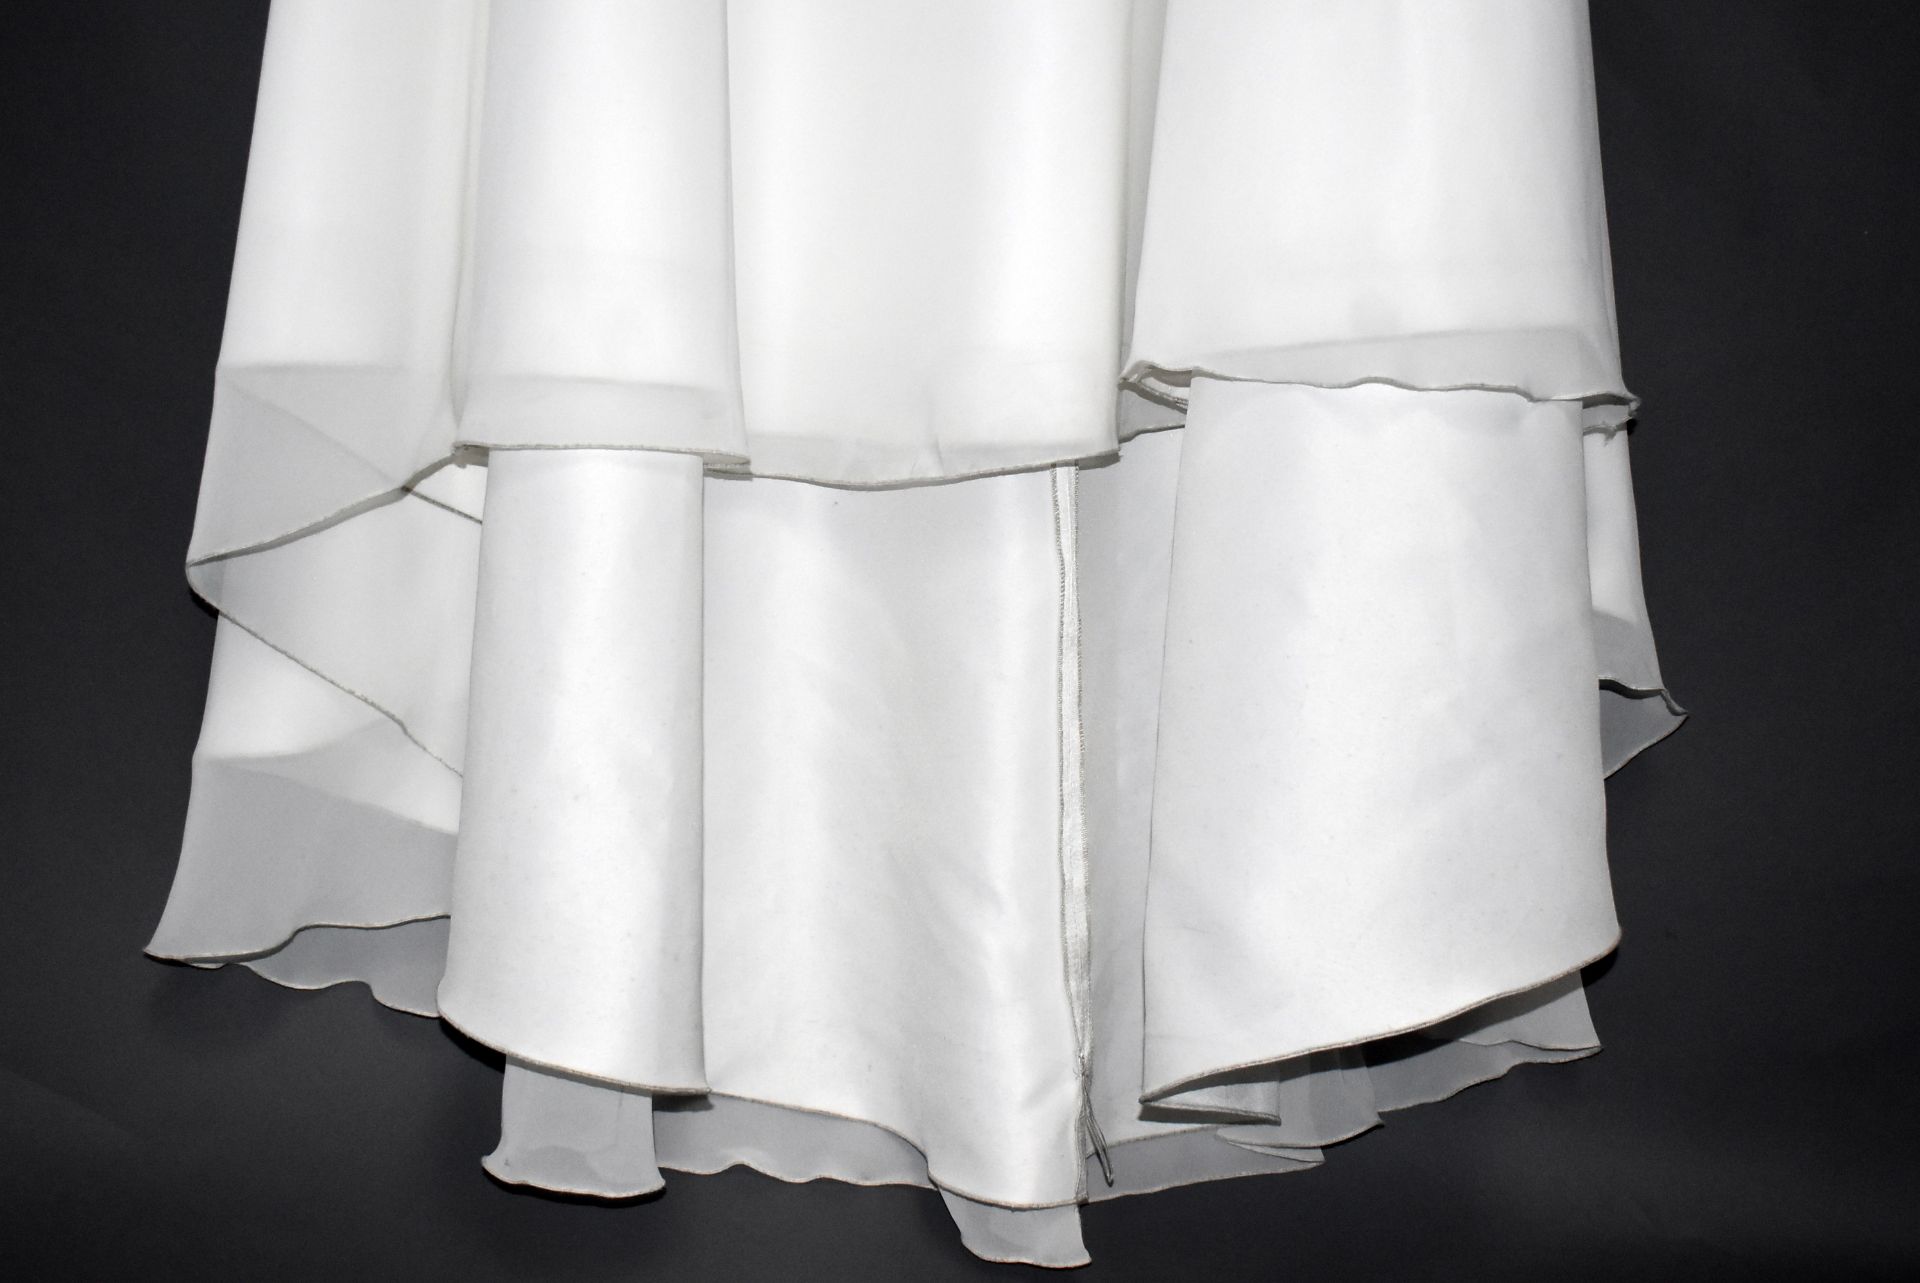 1 x LUSAN MANDONGUS Off The Shoulder Lace Bodice Designer Wedding Dress Bridal Gown RRP £1,450 UK 14 - Image 4 of 6